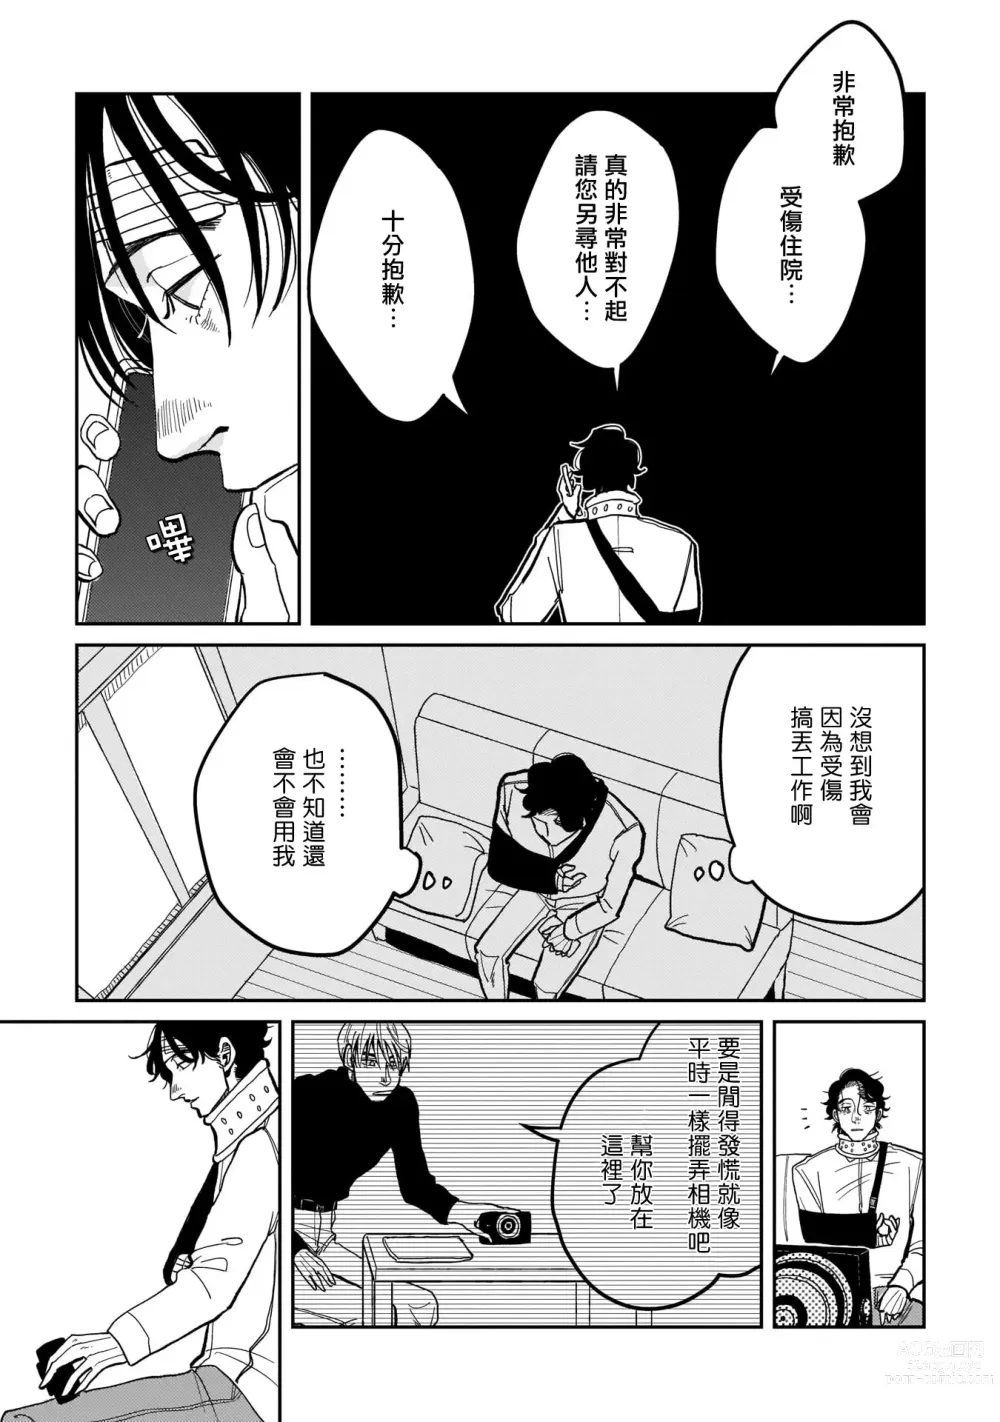 Page 19 of manga 无论疾病、还是健康 #4-6 + P站番外插图 + 番外合集1-7